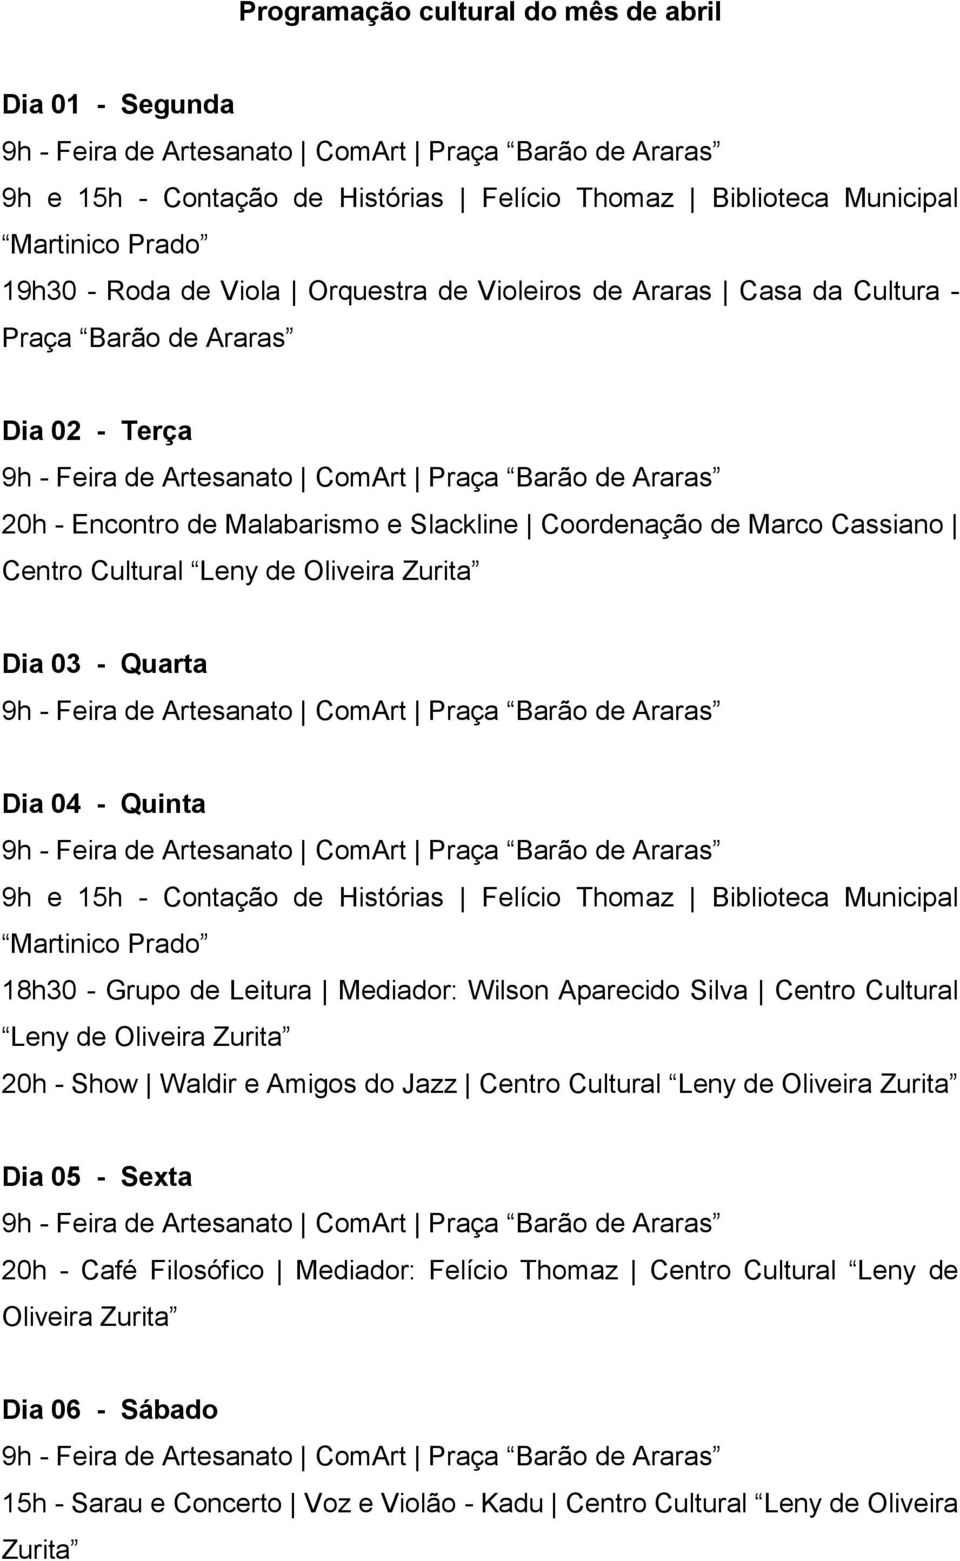 Cultural Leny de Oliveira Zurita 20h - Show Waldir e Amigos do Jazz Dia 05 - Sexta 20h - Café Filosófico Mediador: Felício Thomaz